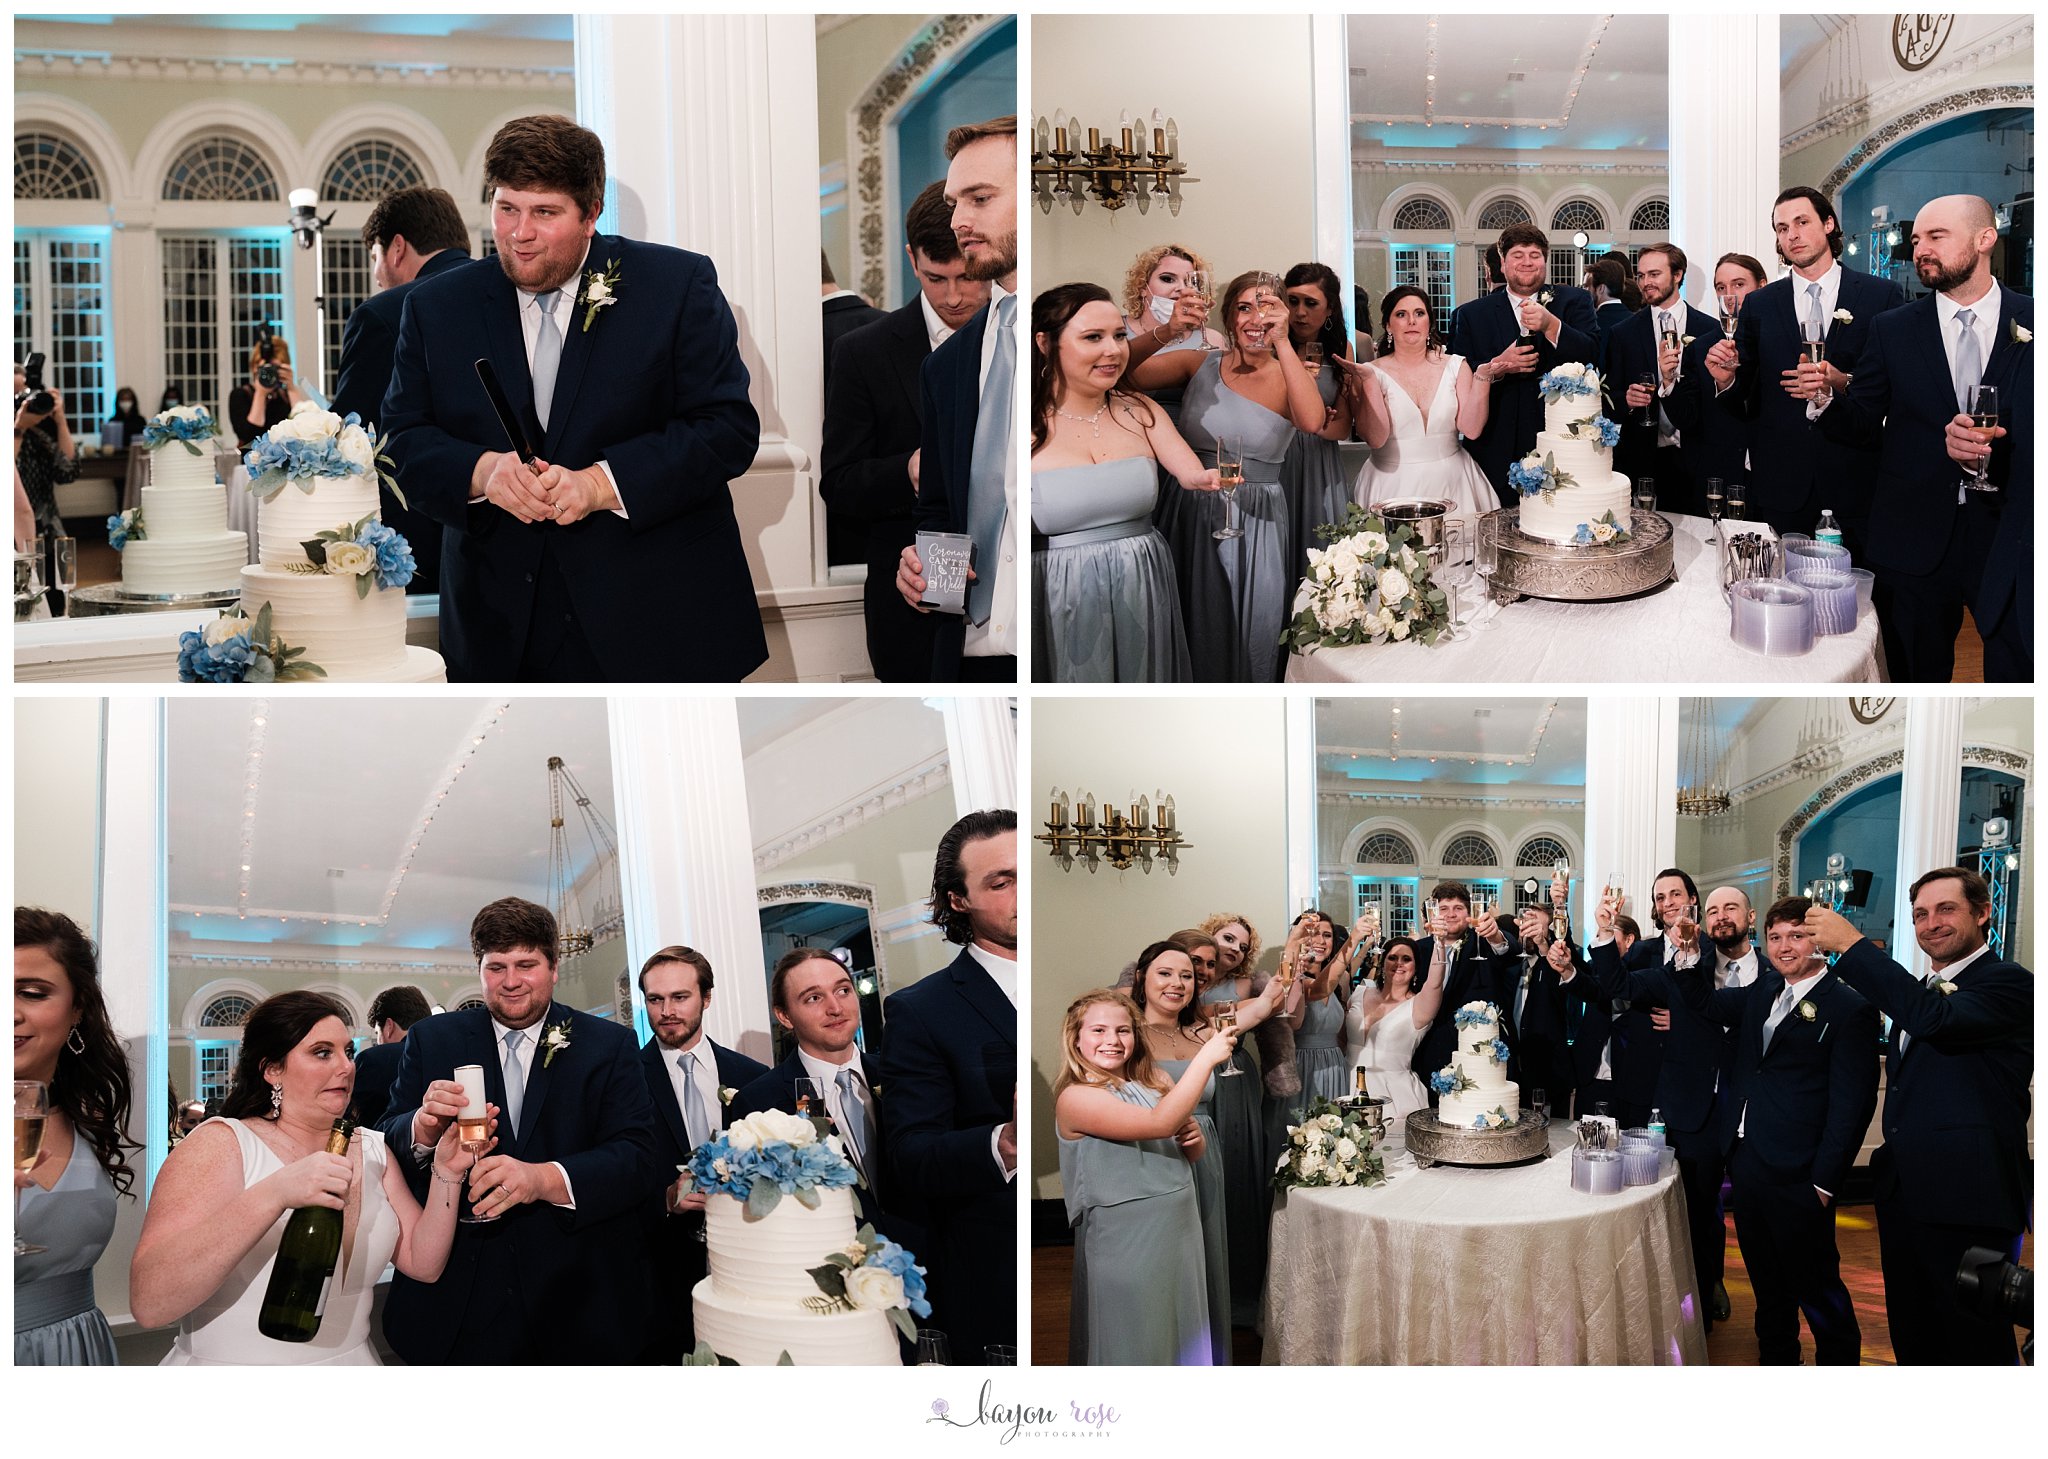 cake cutting and wedding toasts